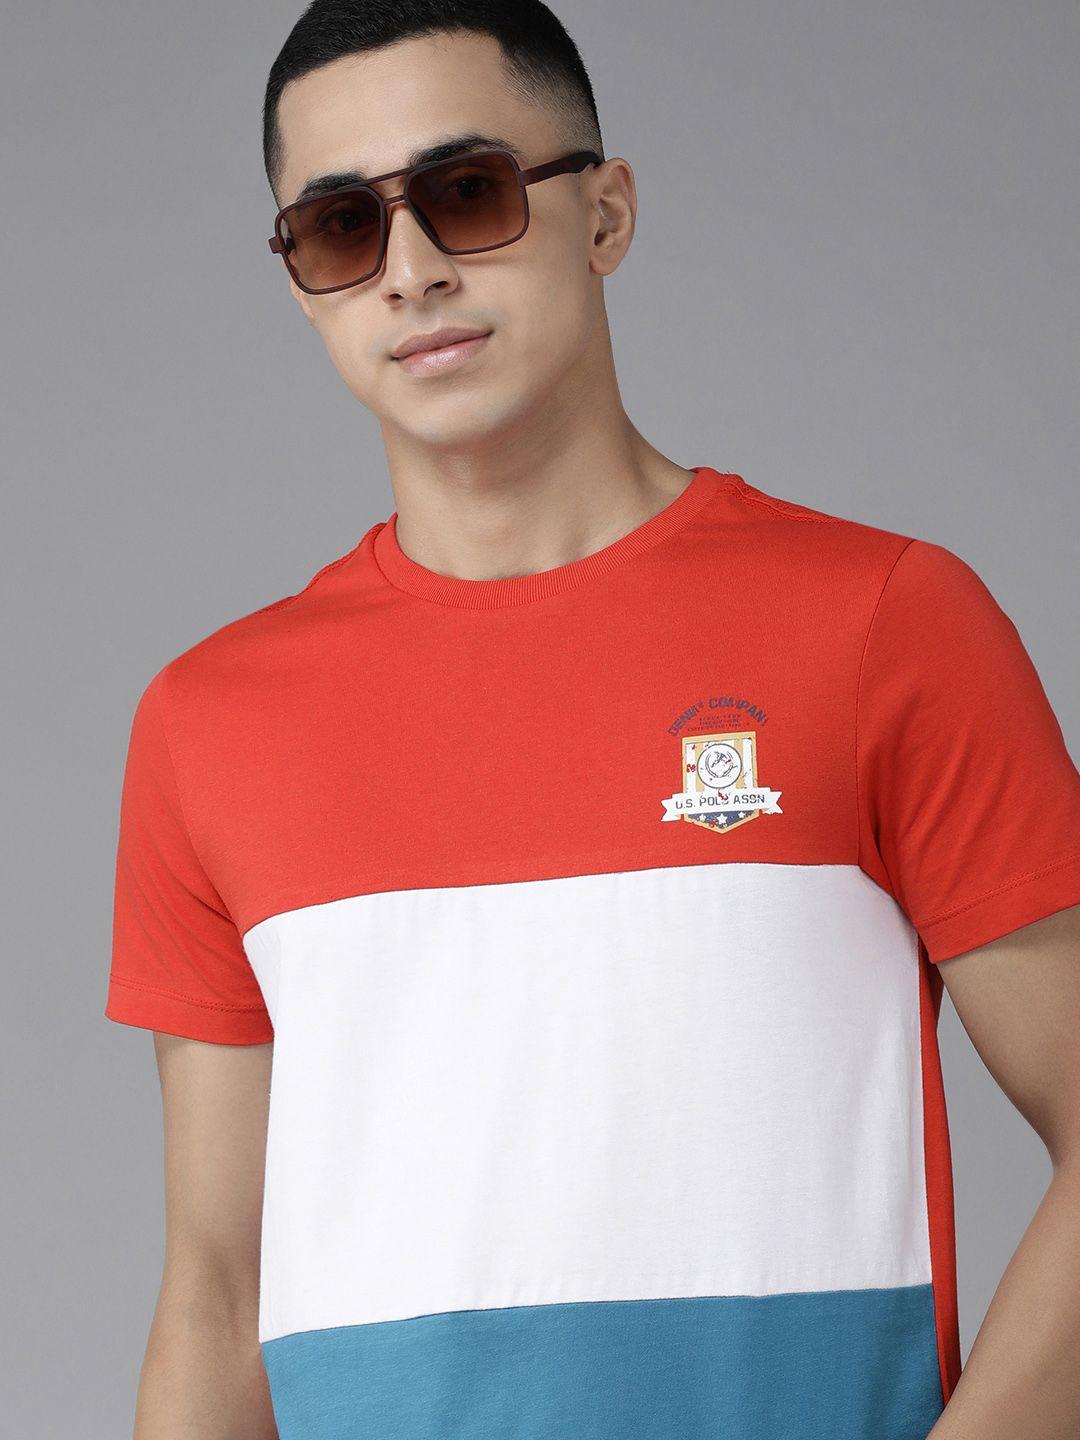 u s polo assn denim co men red & white colourblocked pure cotton slim fit t-shirt